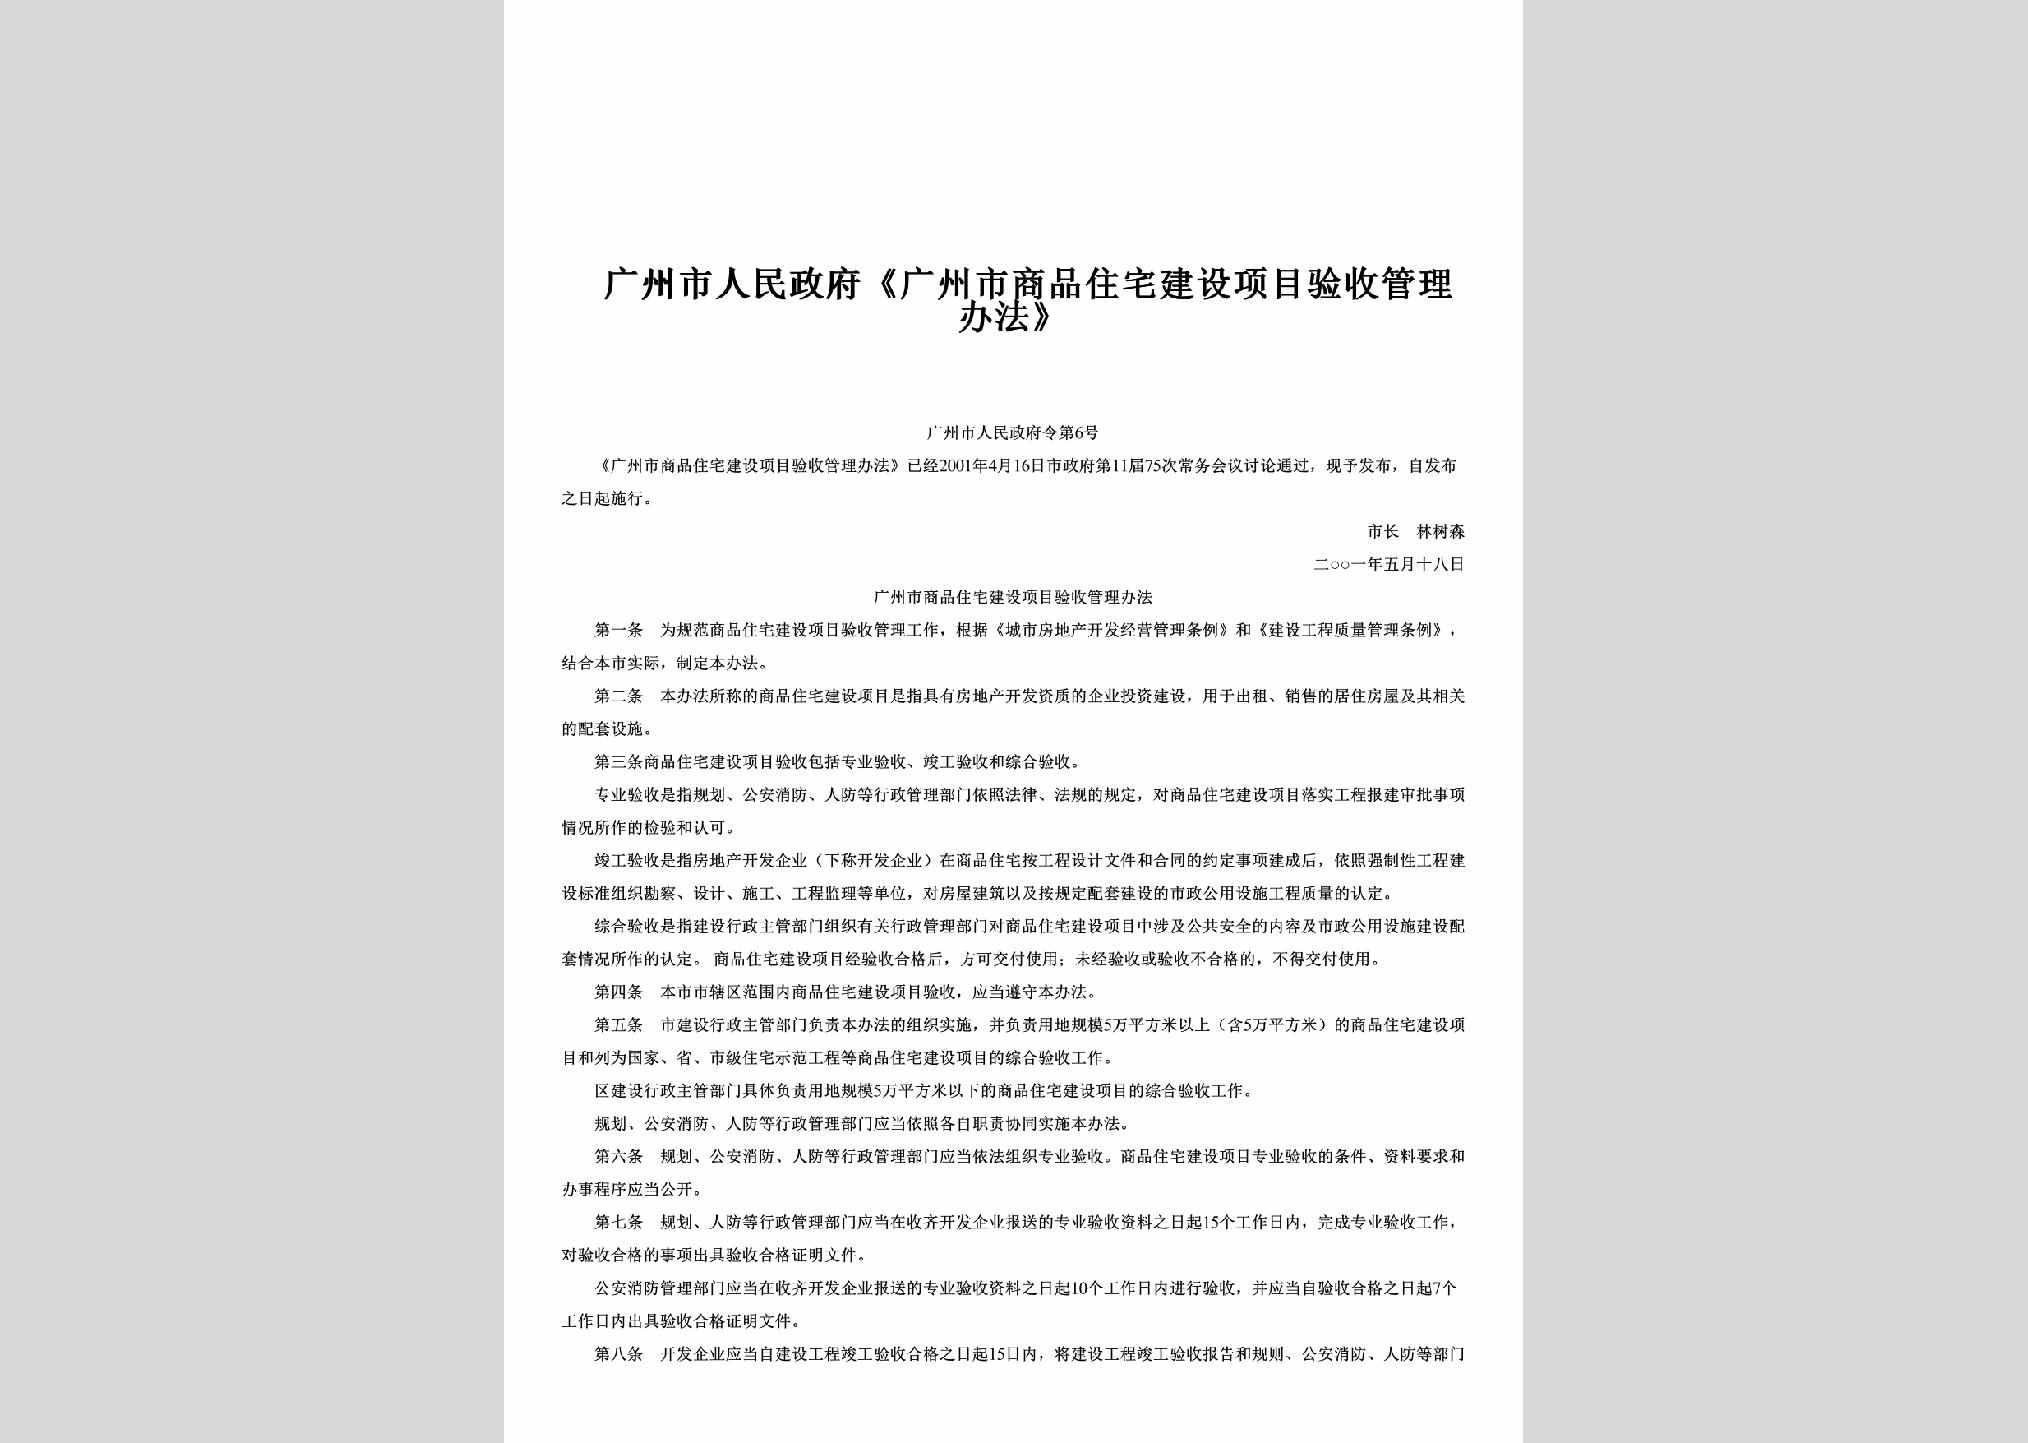 GZSRMZF-2001-6：《广州市商品住宅建设项目验收管理办法》